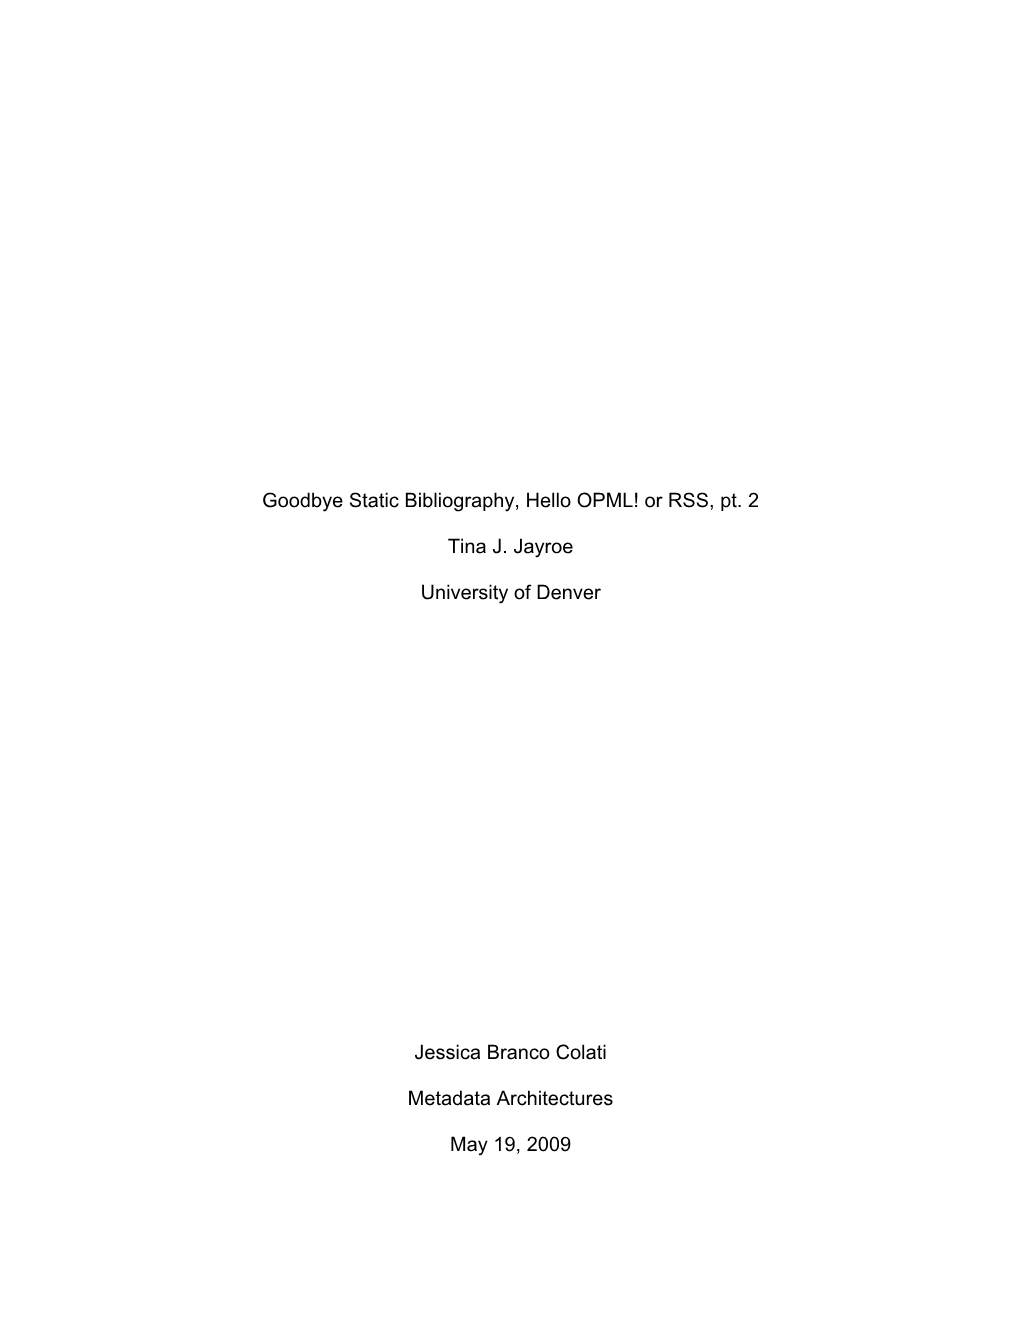 Goodbye Static Bibliography, Hello OPML! Or RSS, Pt. 2 Tina J. Jayroe